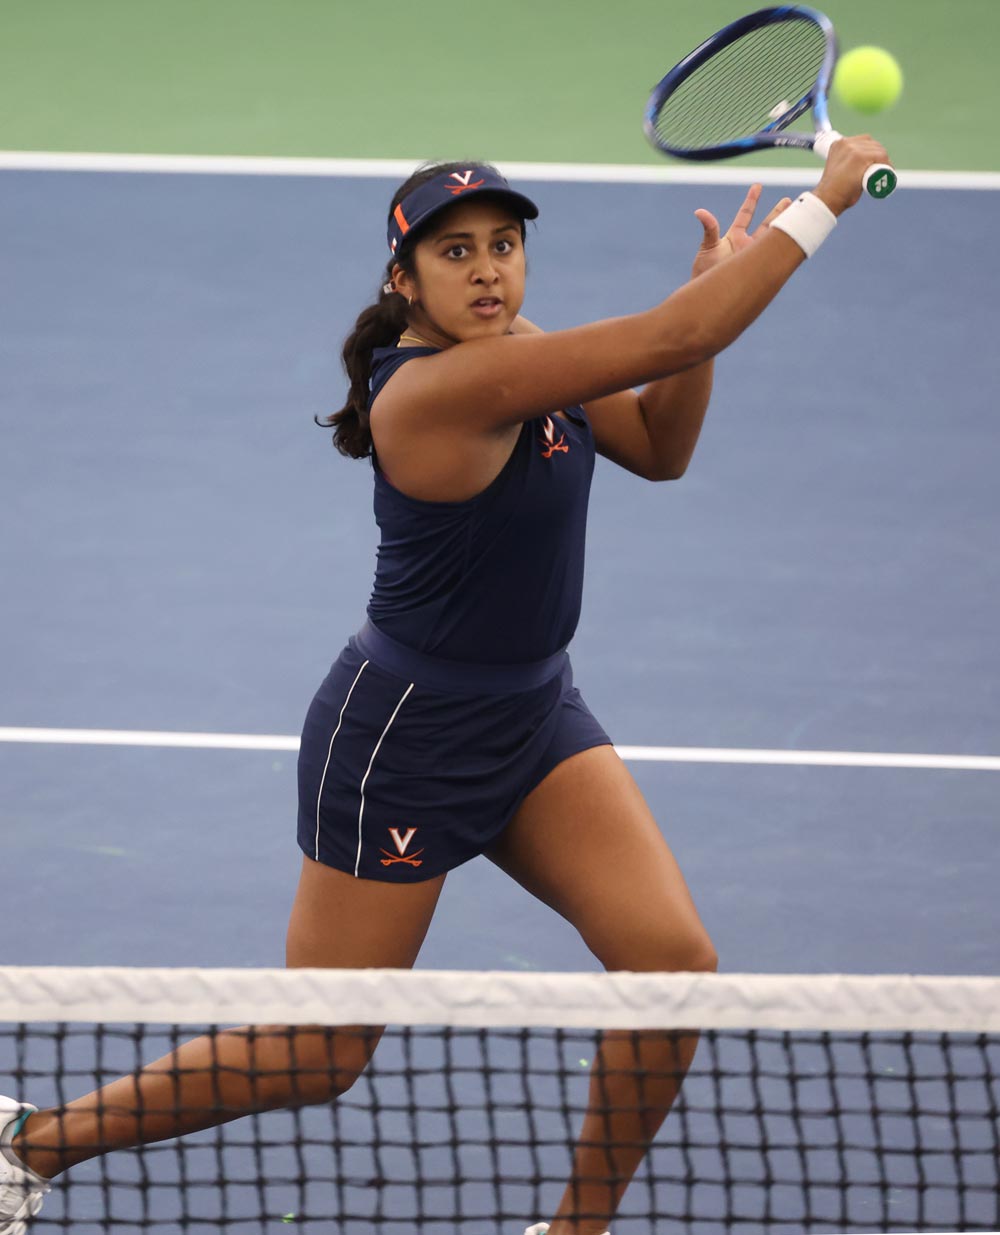 Action shot of Natasha Subhash swinging a tennis racket